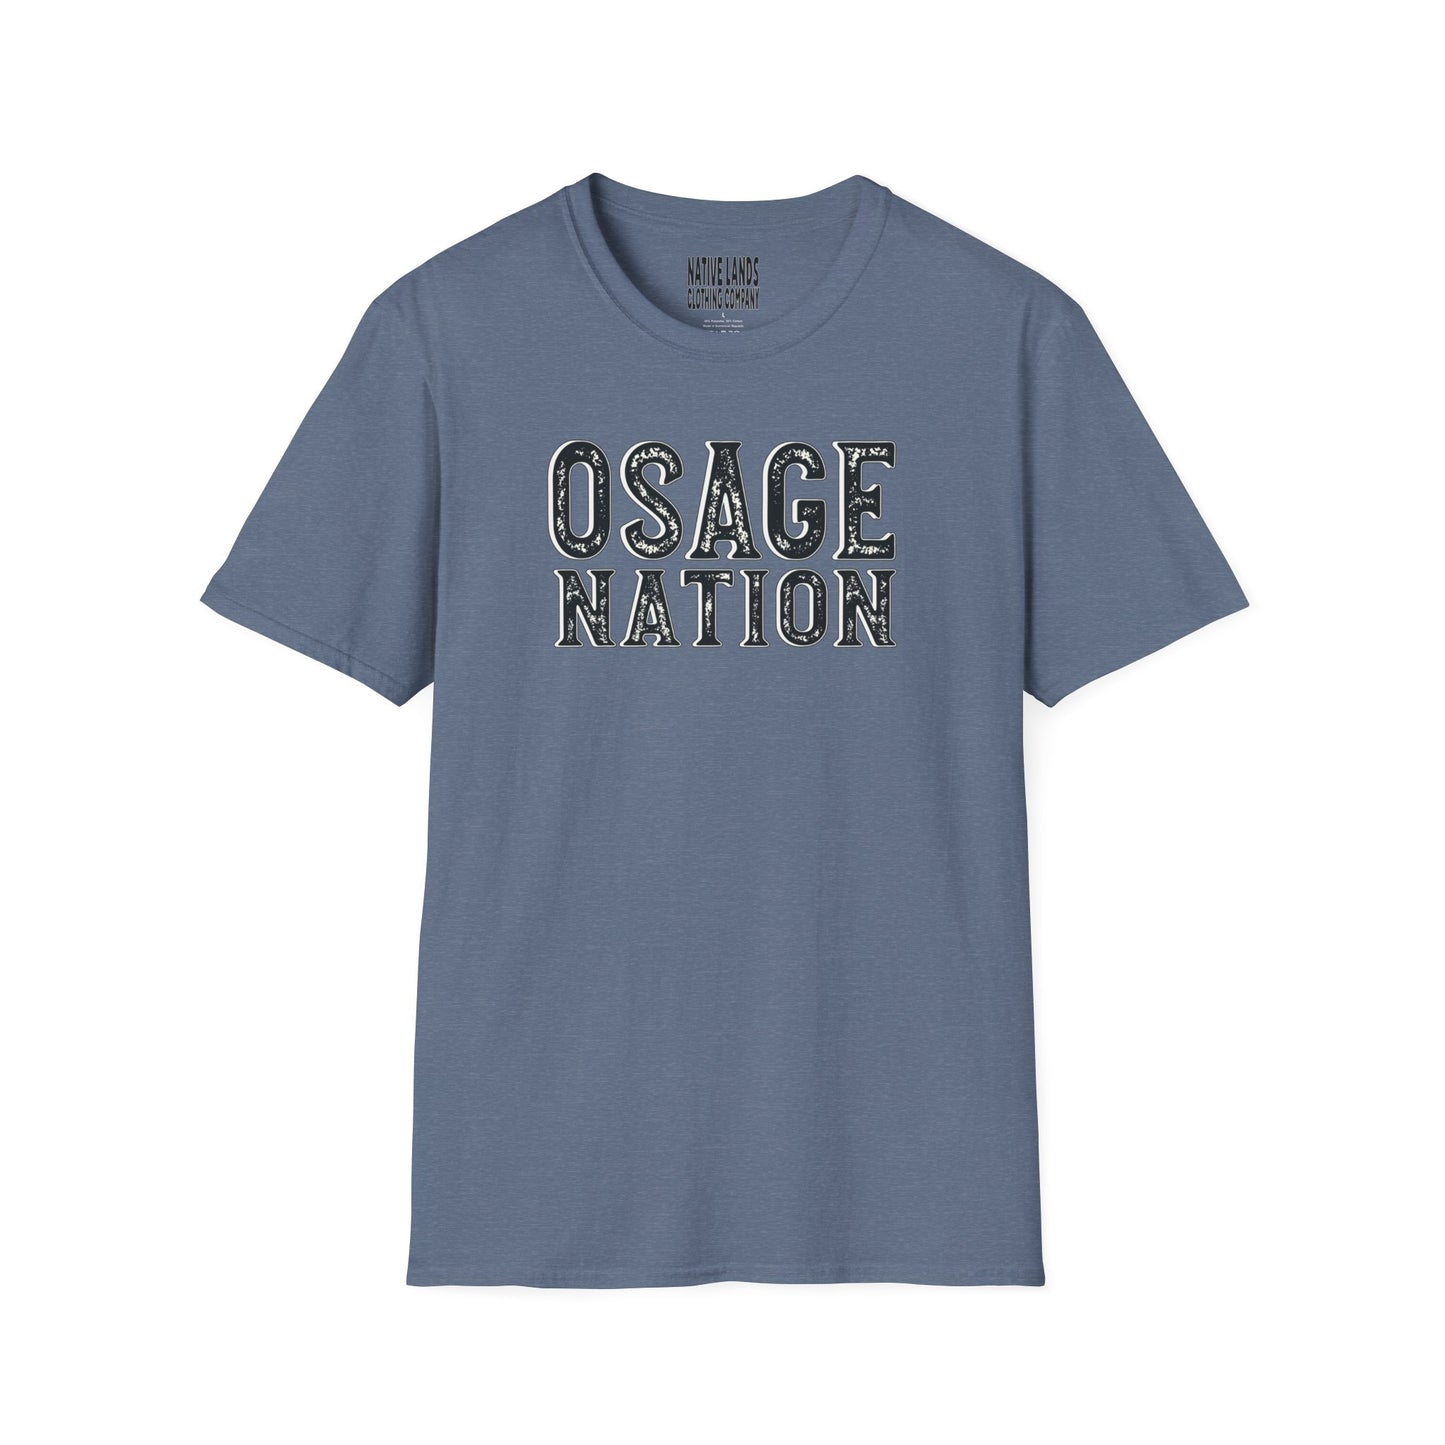 Osage Nation Shirt Cotton Native American